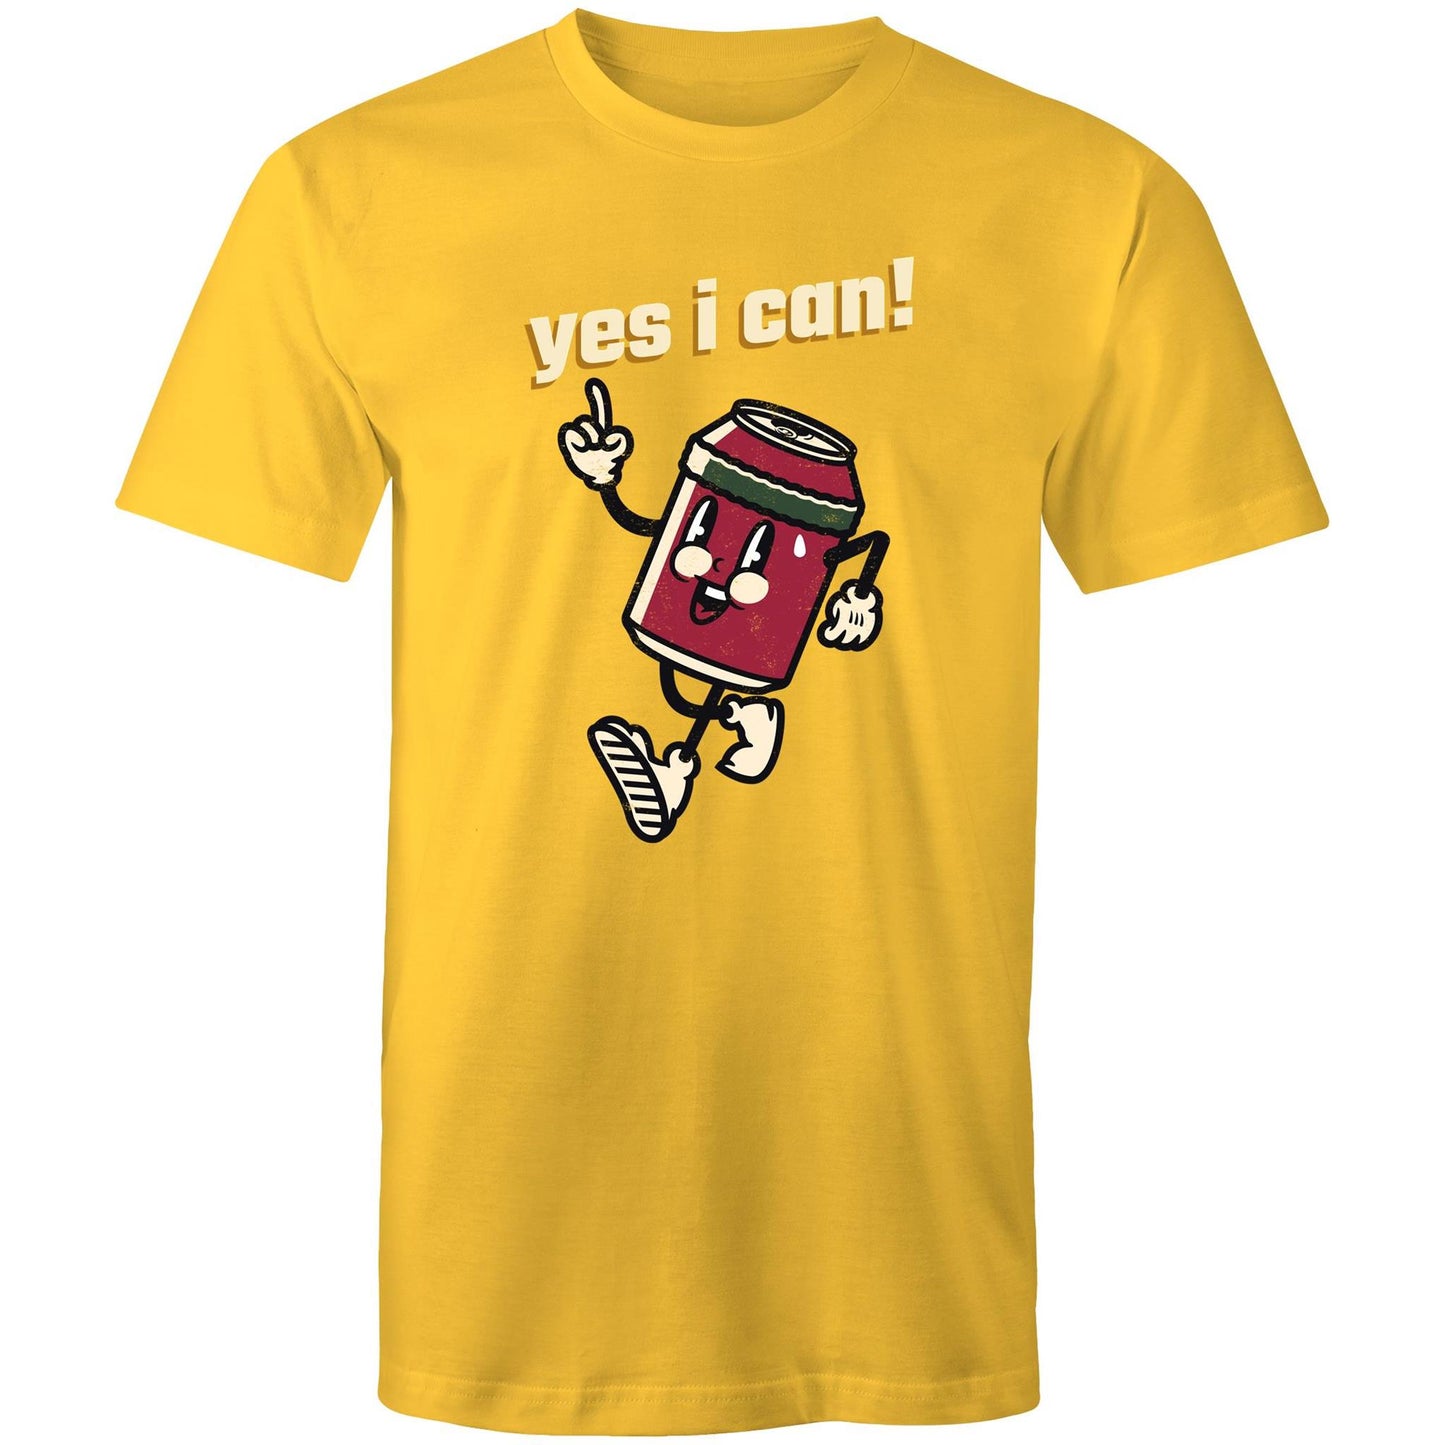 Yes I Can! - Mens T-Shirt Yellow Mens T-shirt Motivation Retro